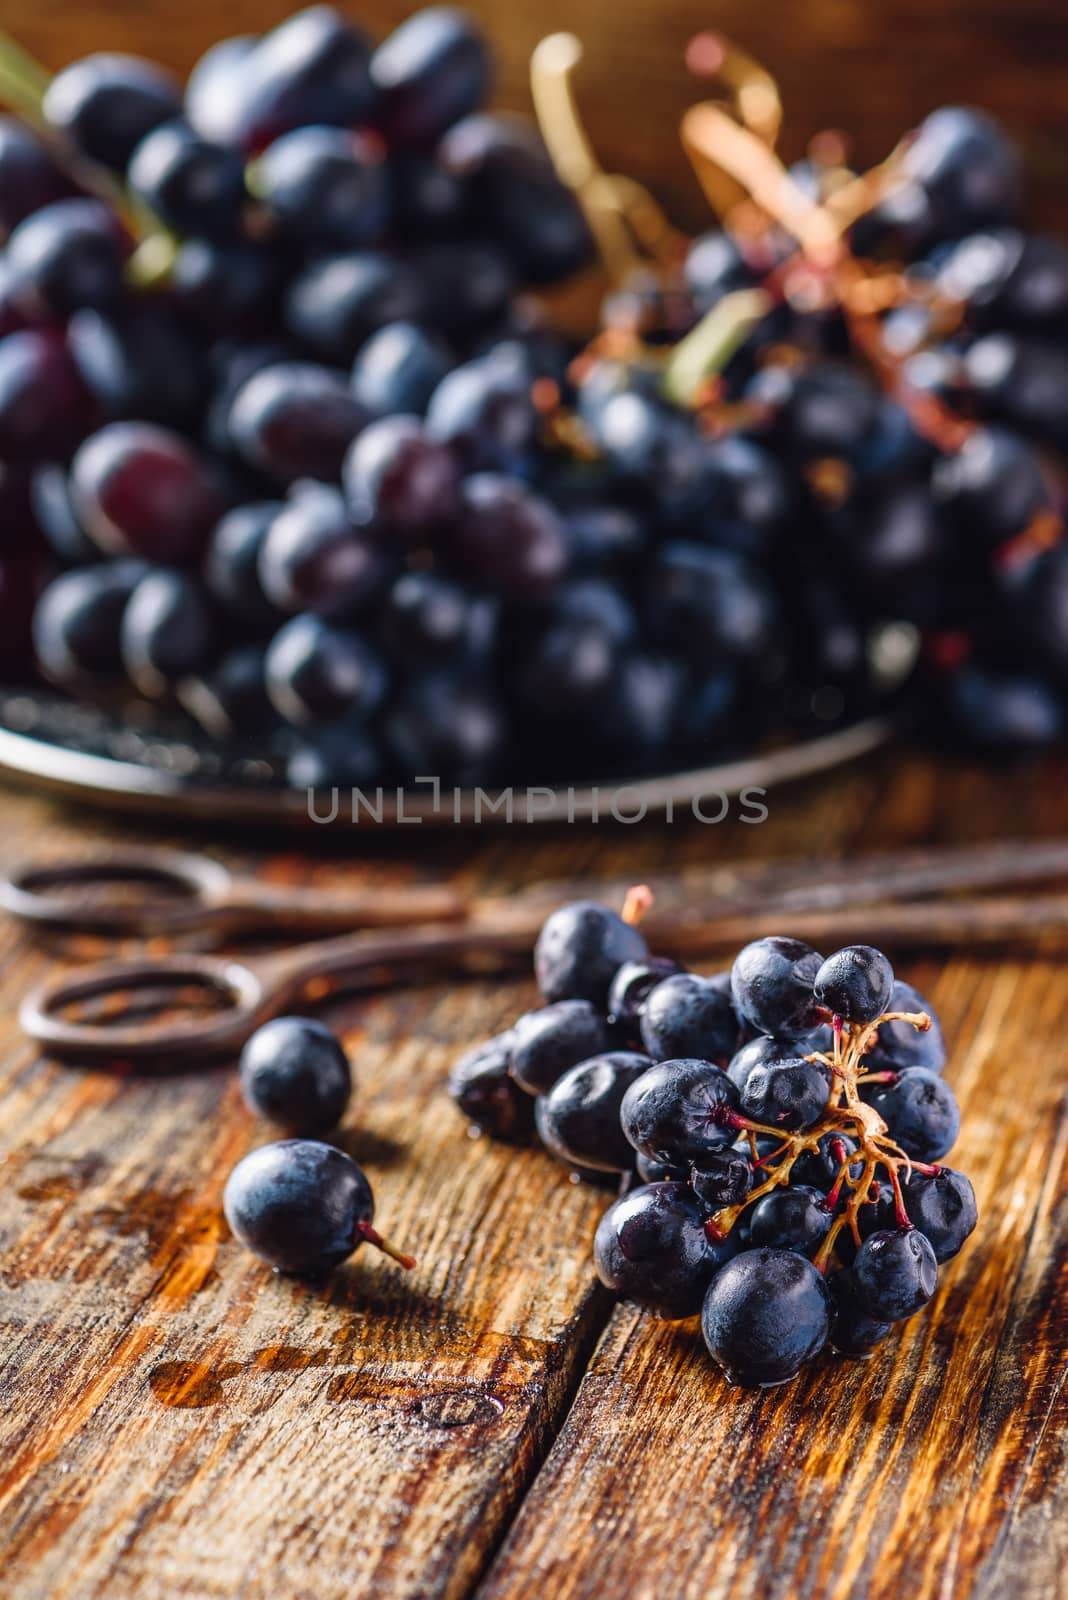 Blue Vine Grapes and Rusty Scissors by Seva_blsv